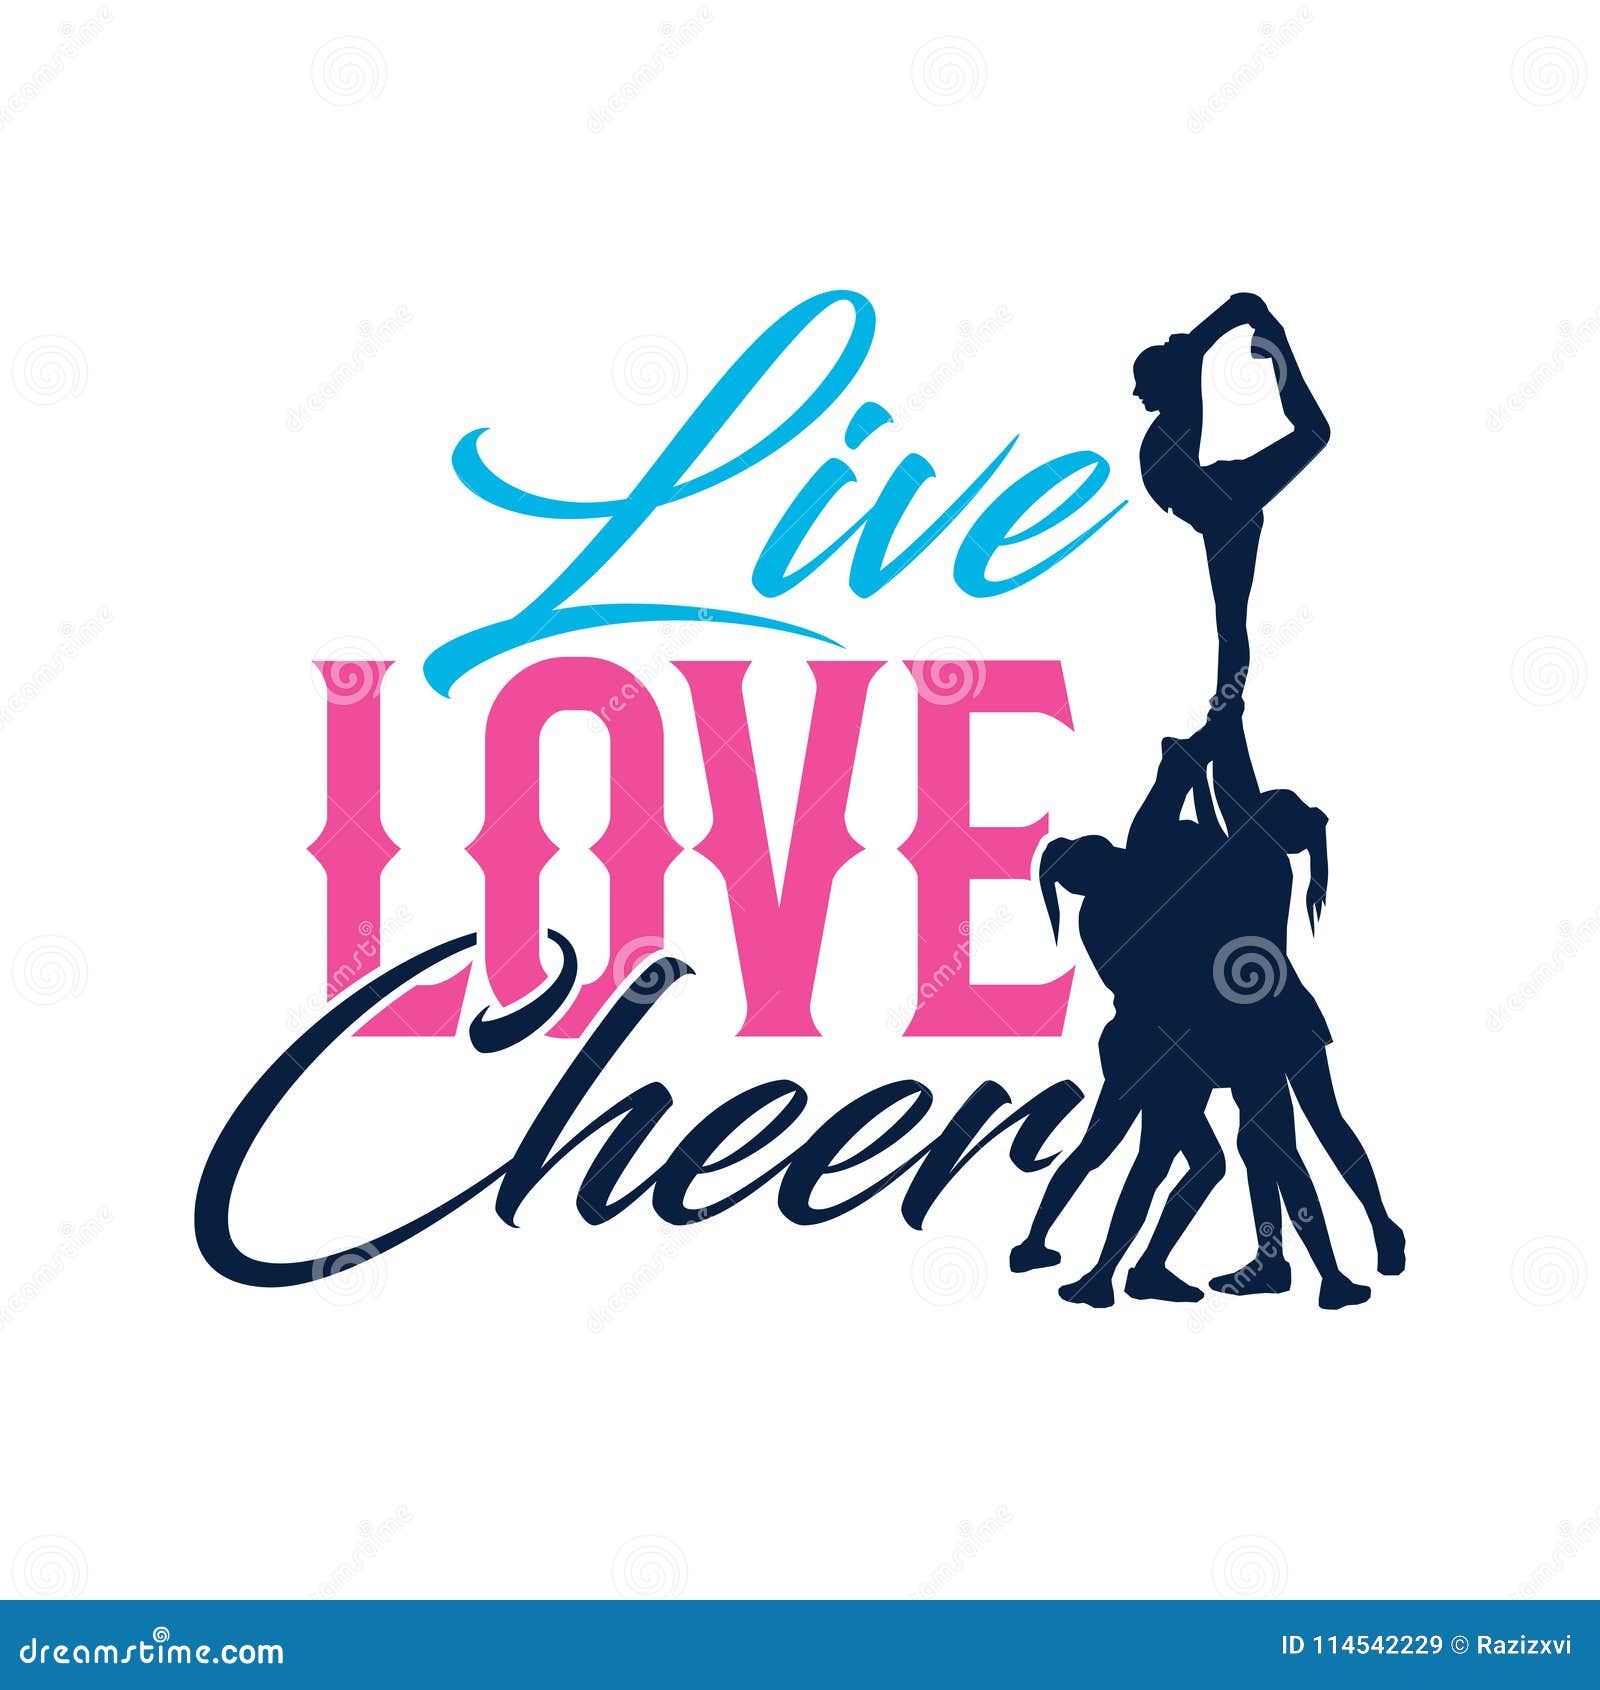  typo live love cheer silhouette